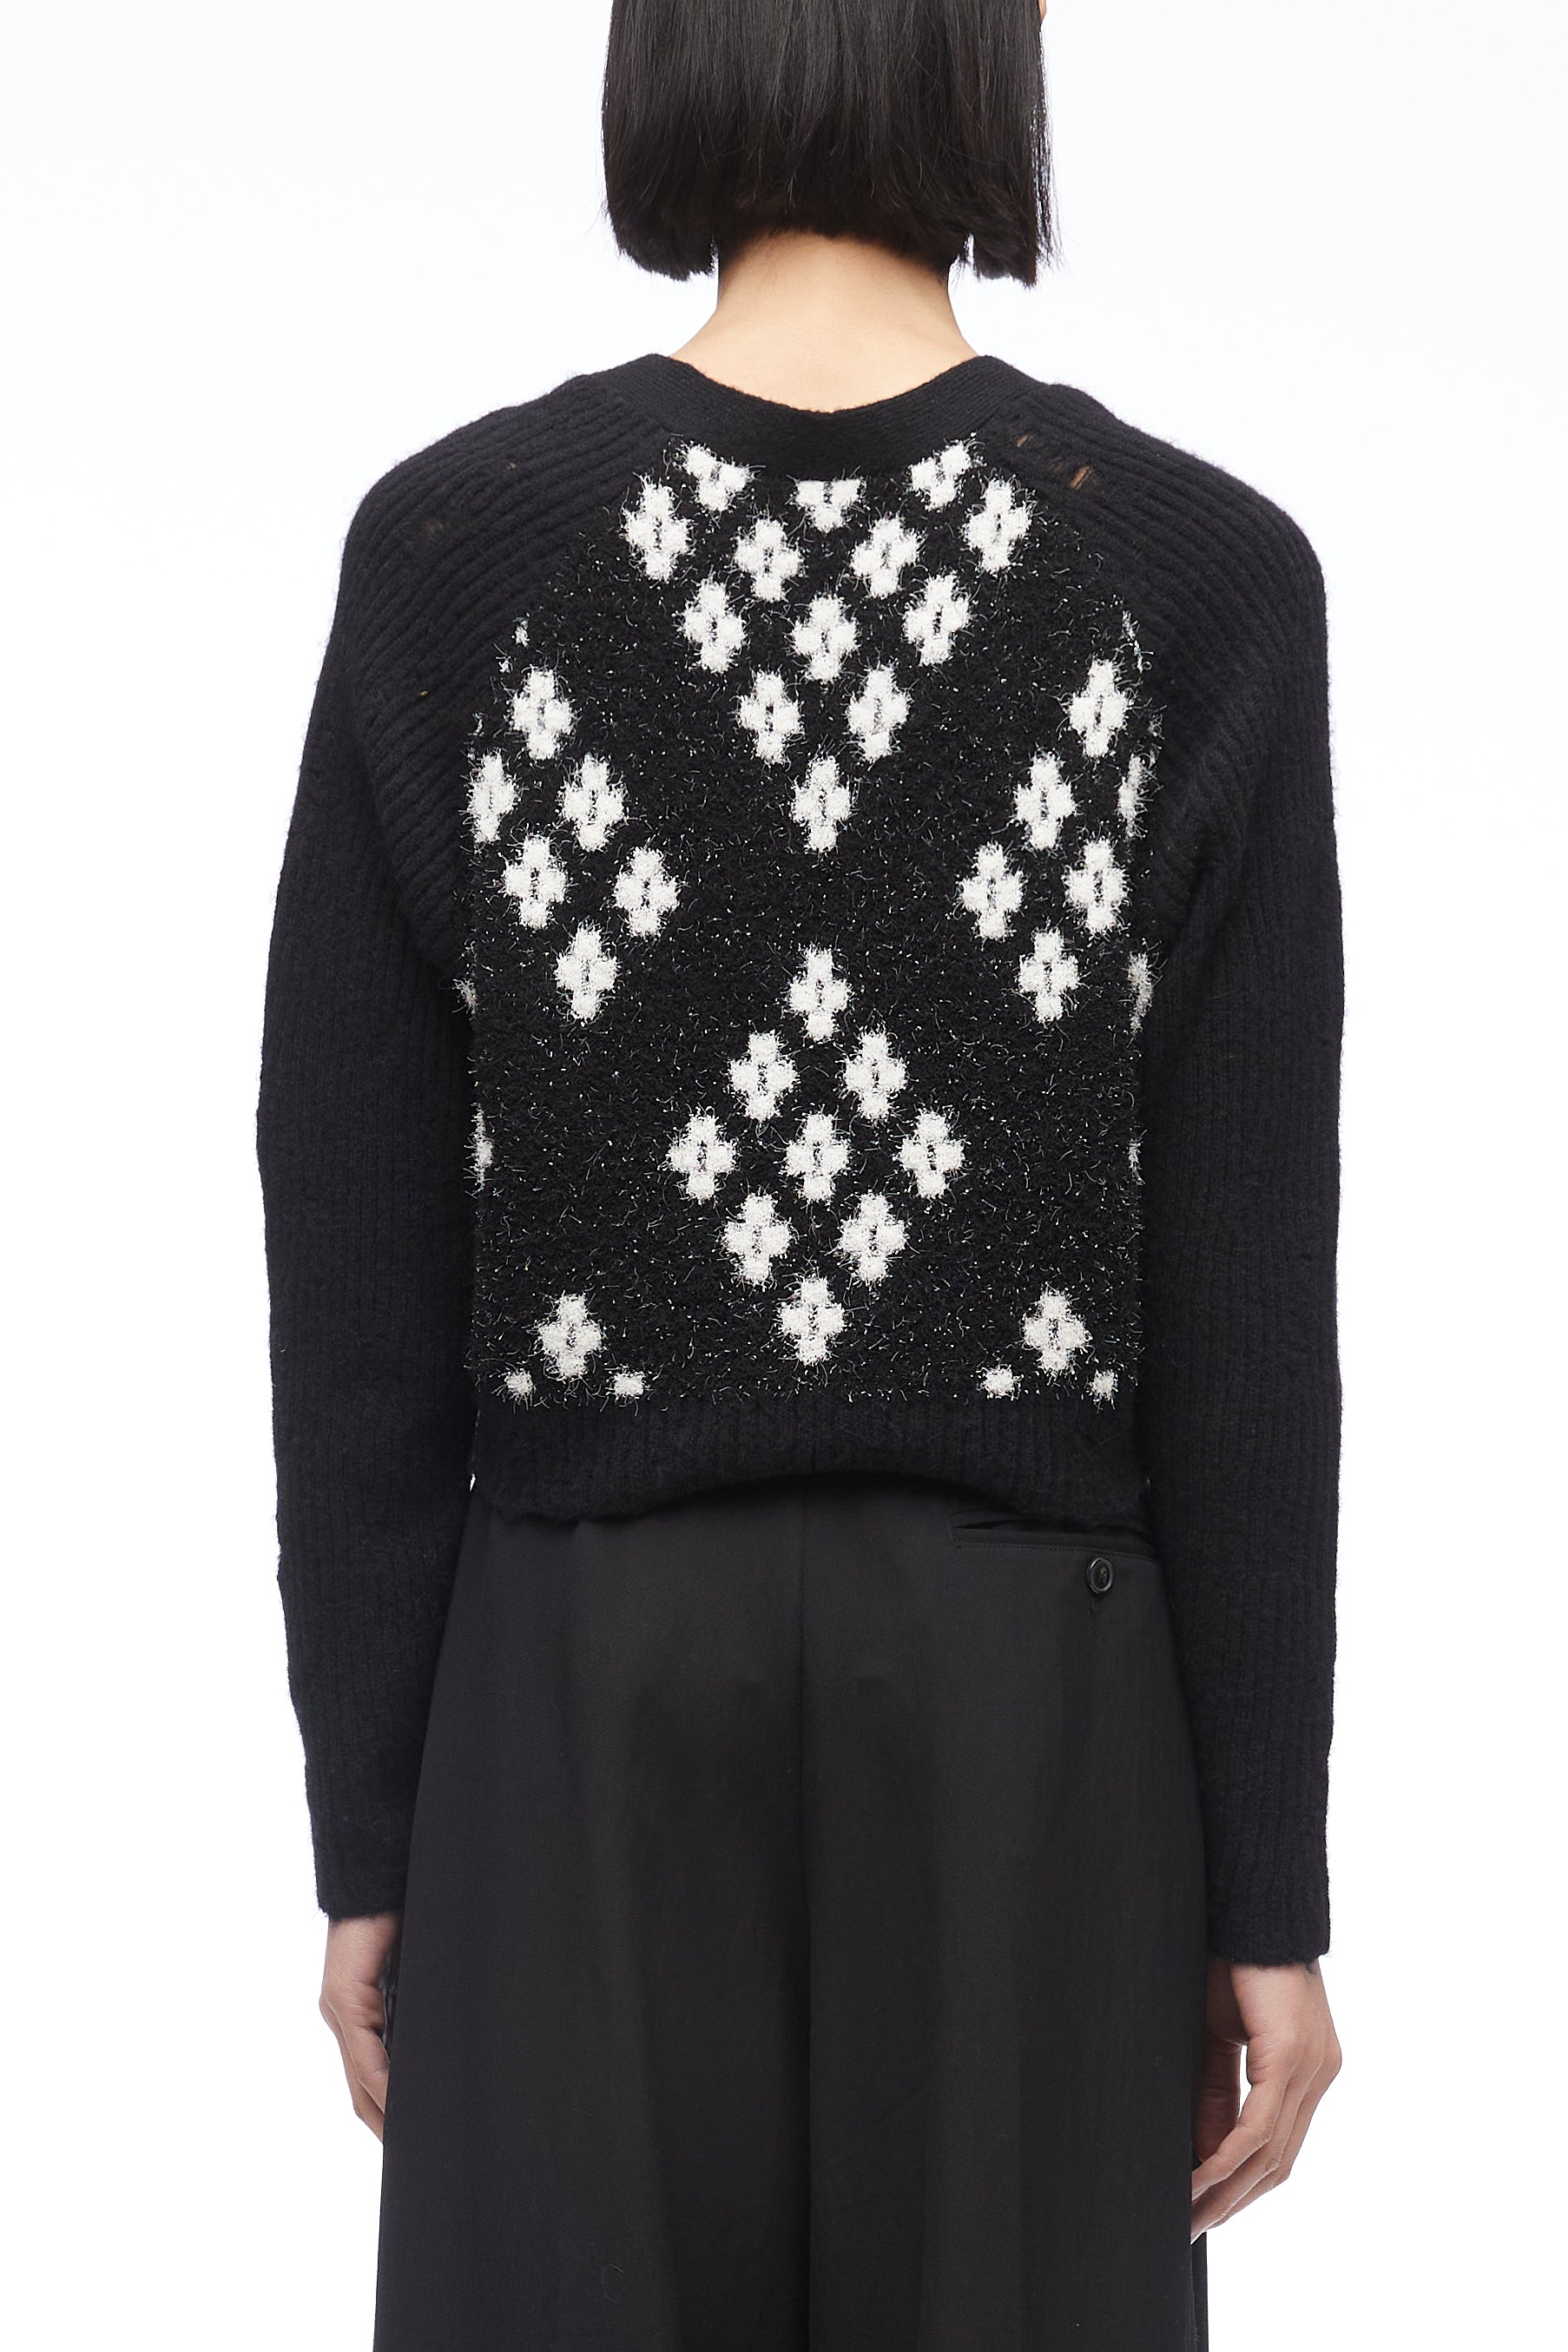 3.1 Phillip Lim argyle-check knitted cardigan - Black